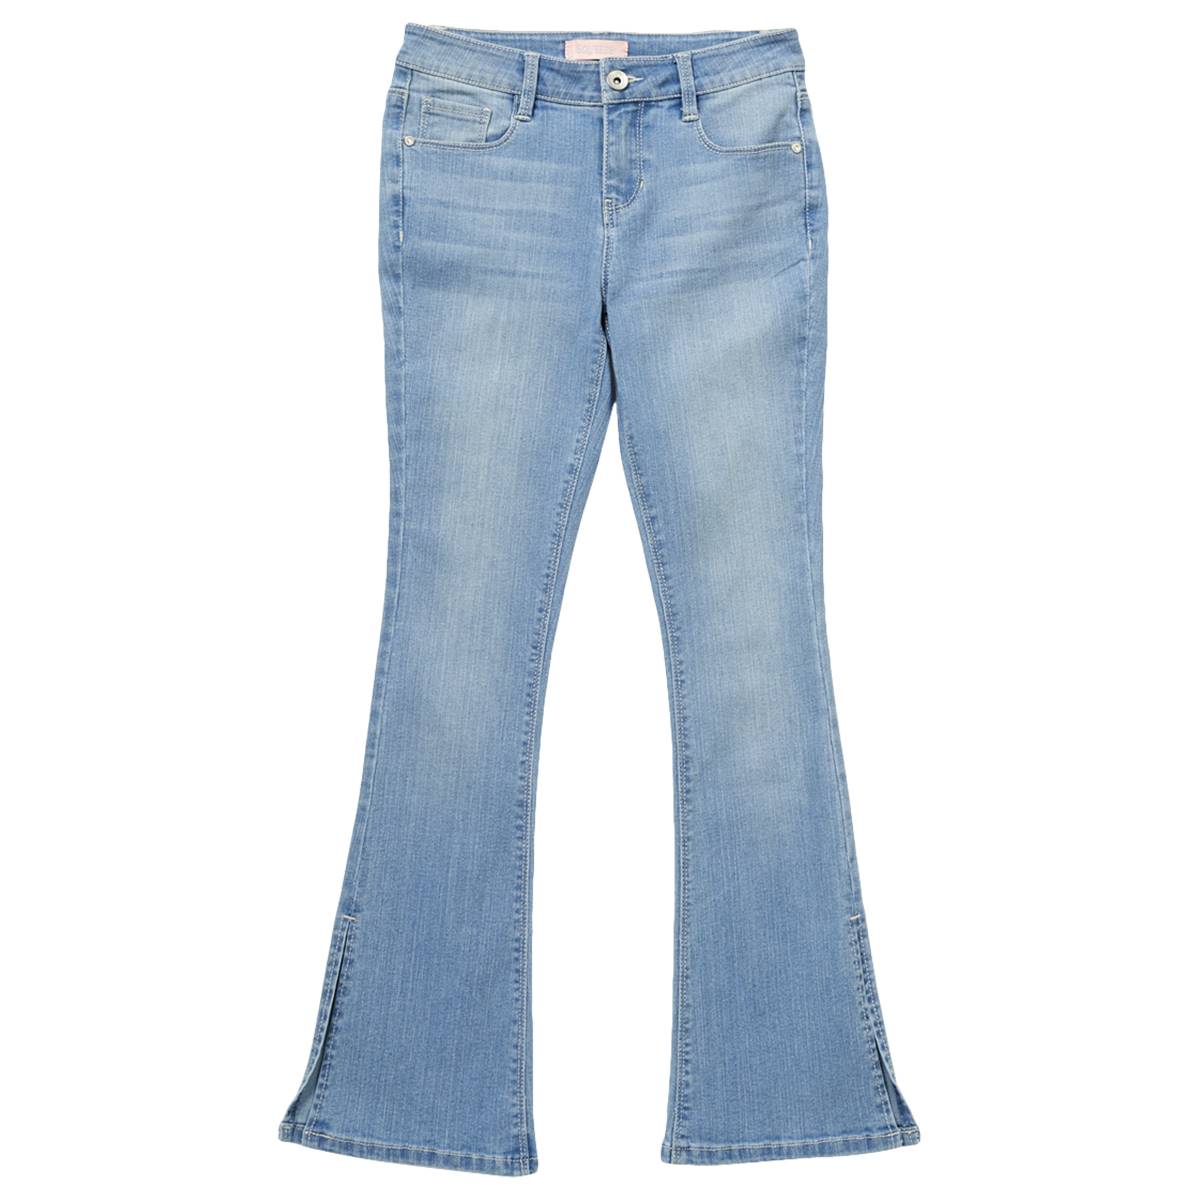 Girls (7-12) Squeeze 5-Pocket Flared Jeans W/Side Slits